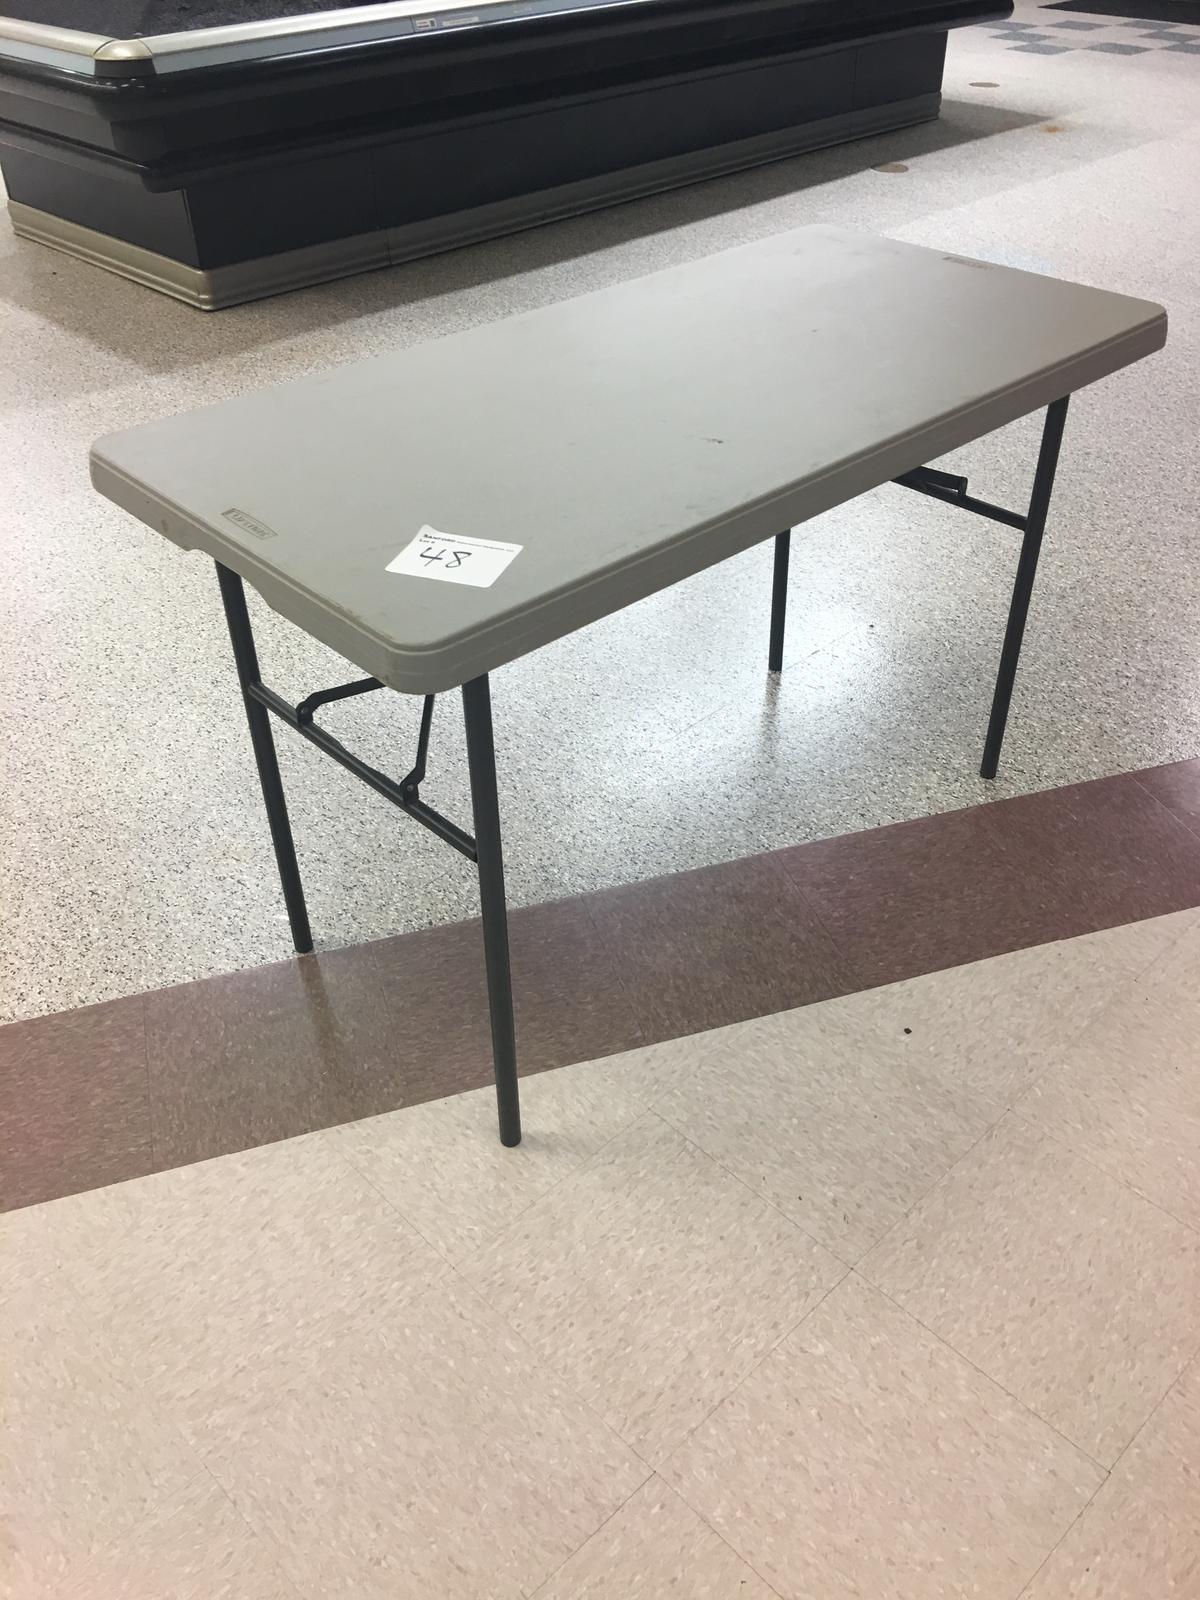 Folding table, plastic